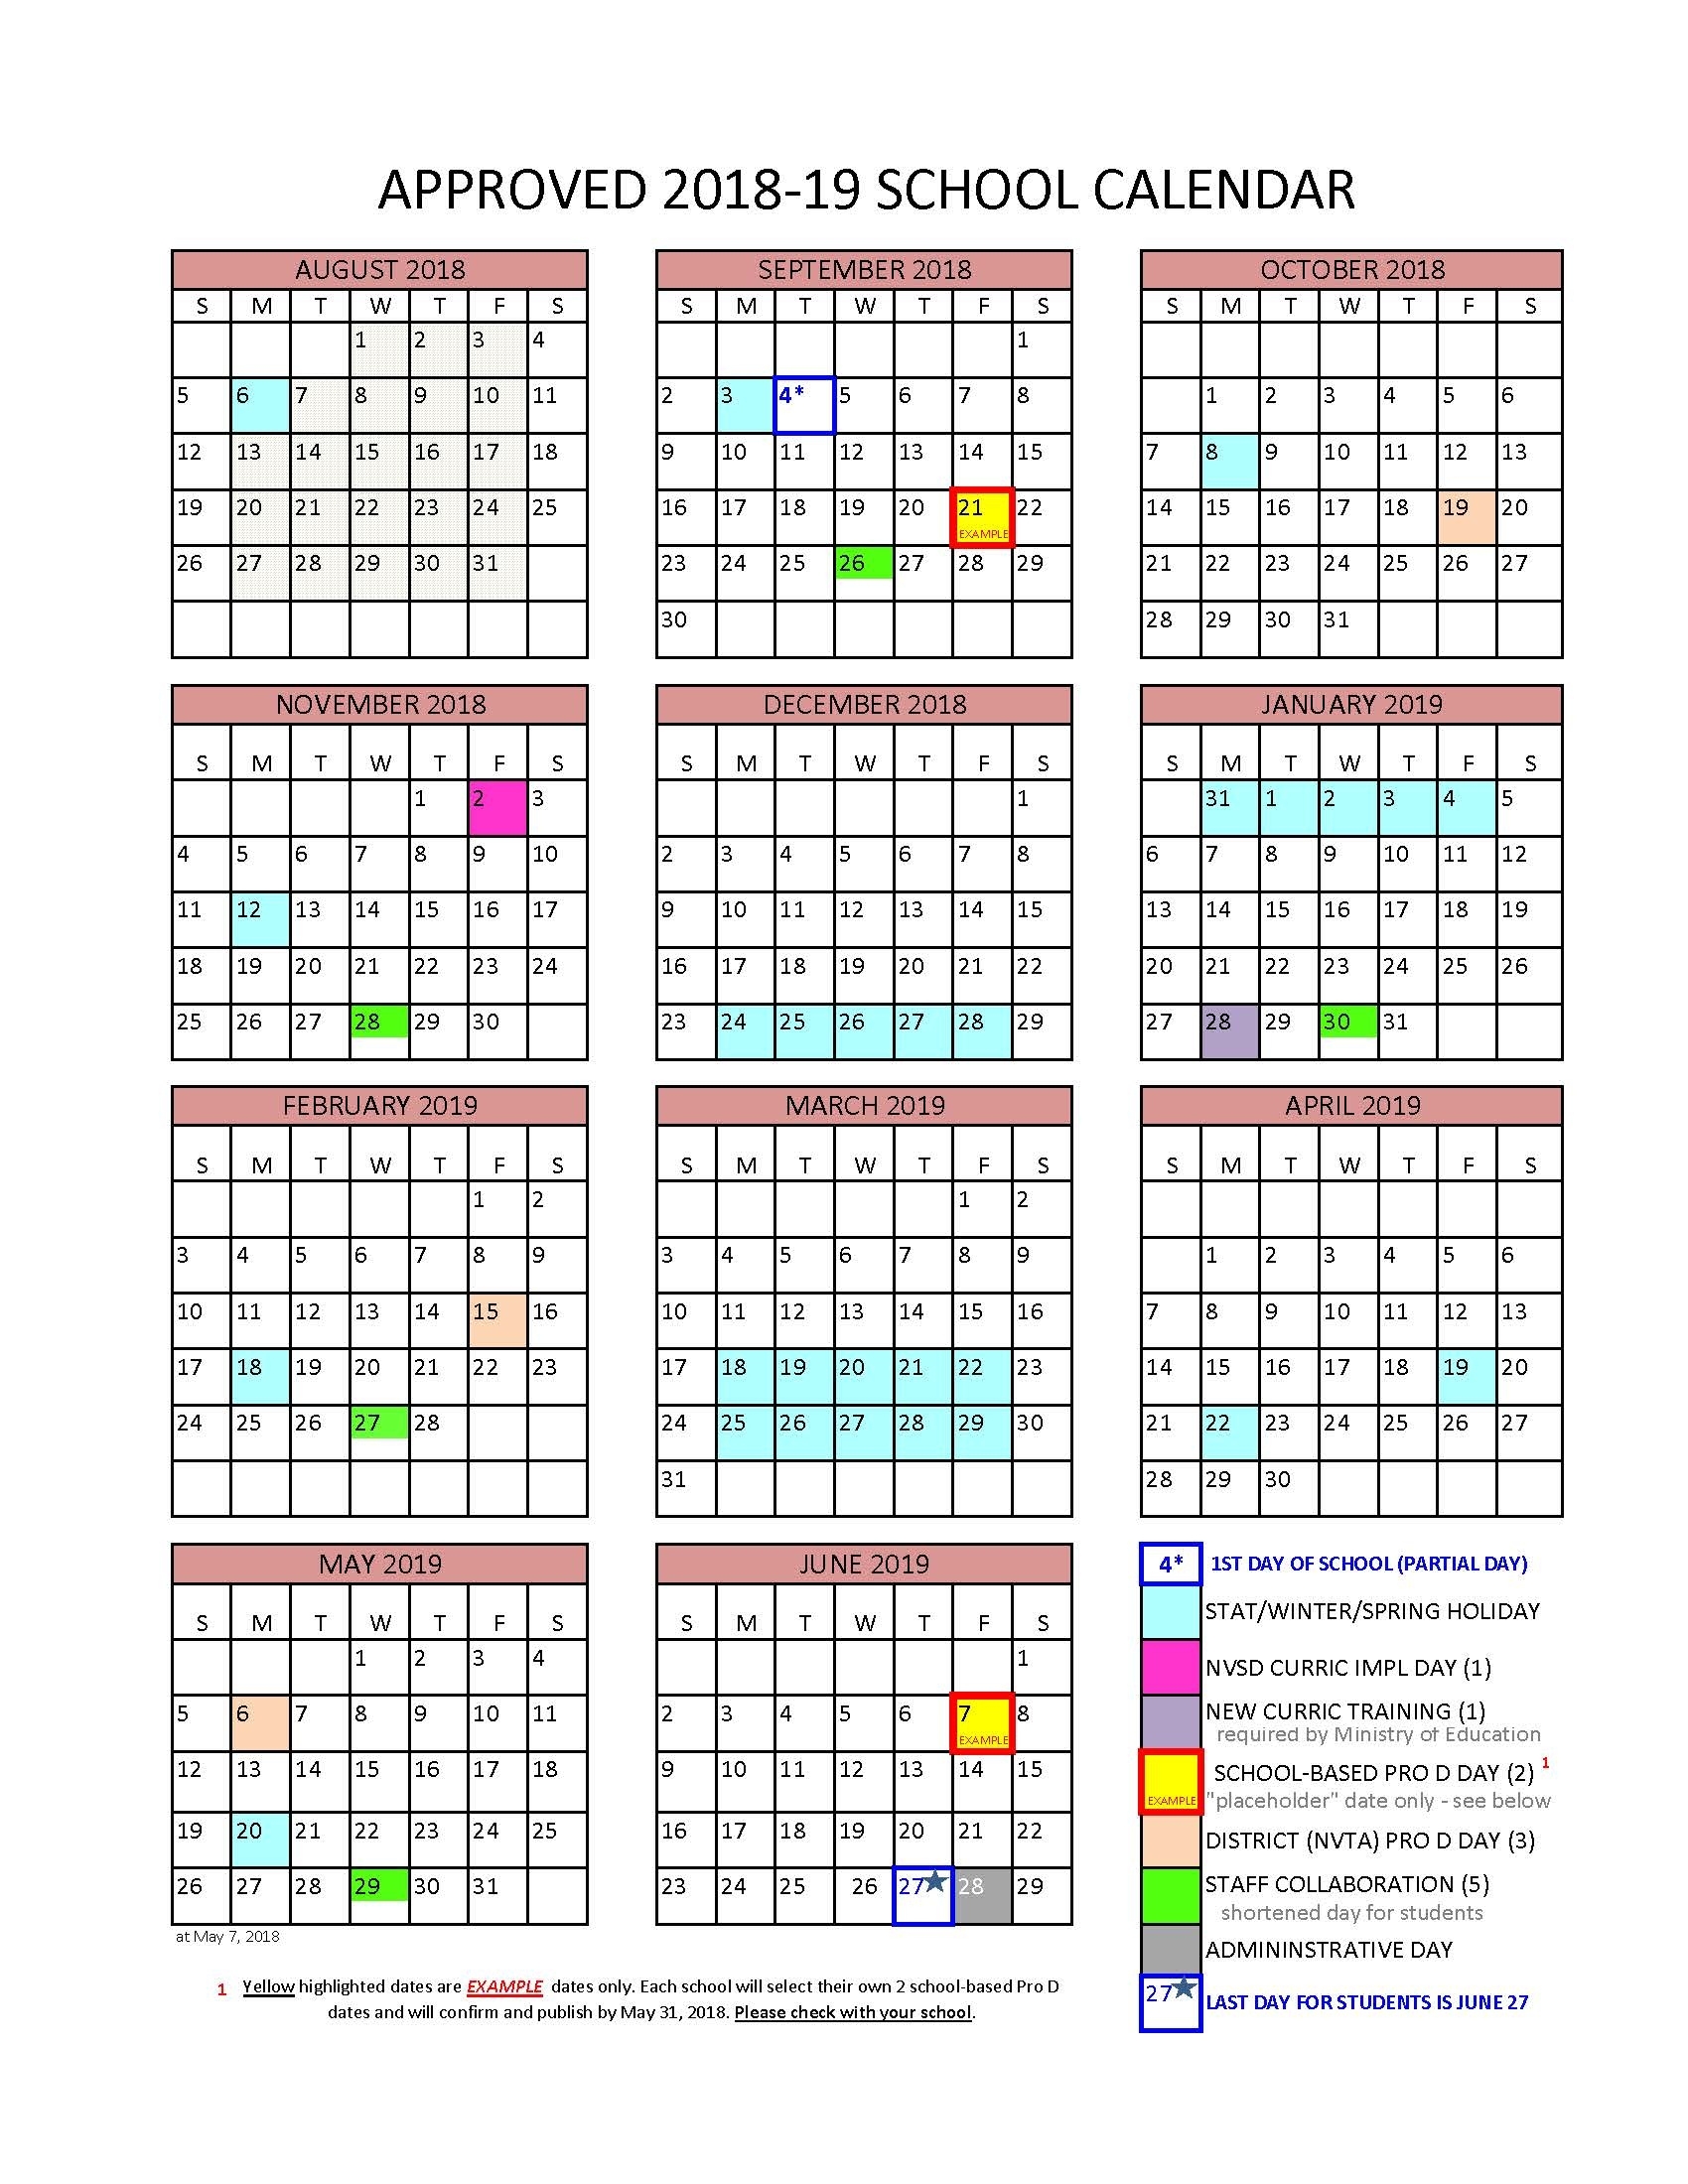 District Calendar - North Vancouver School District 4 Track School Calendar